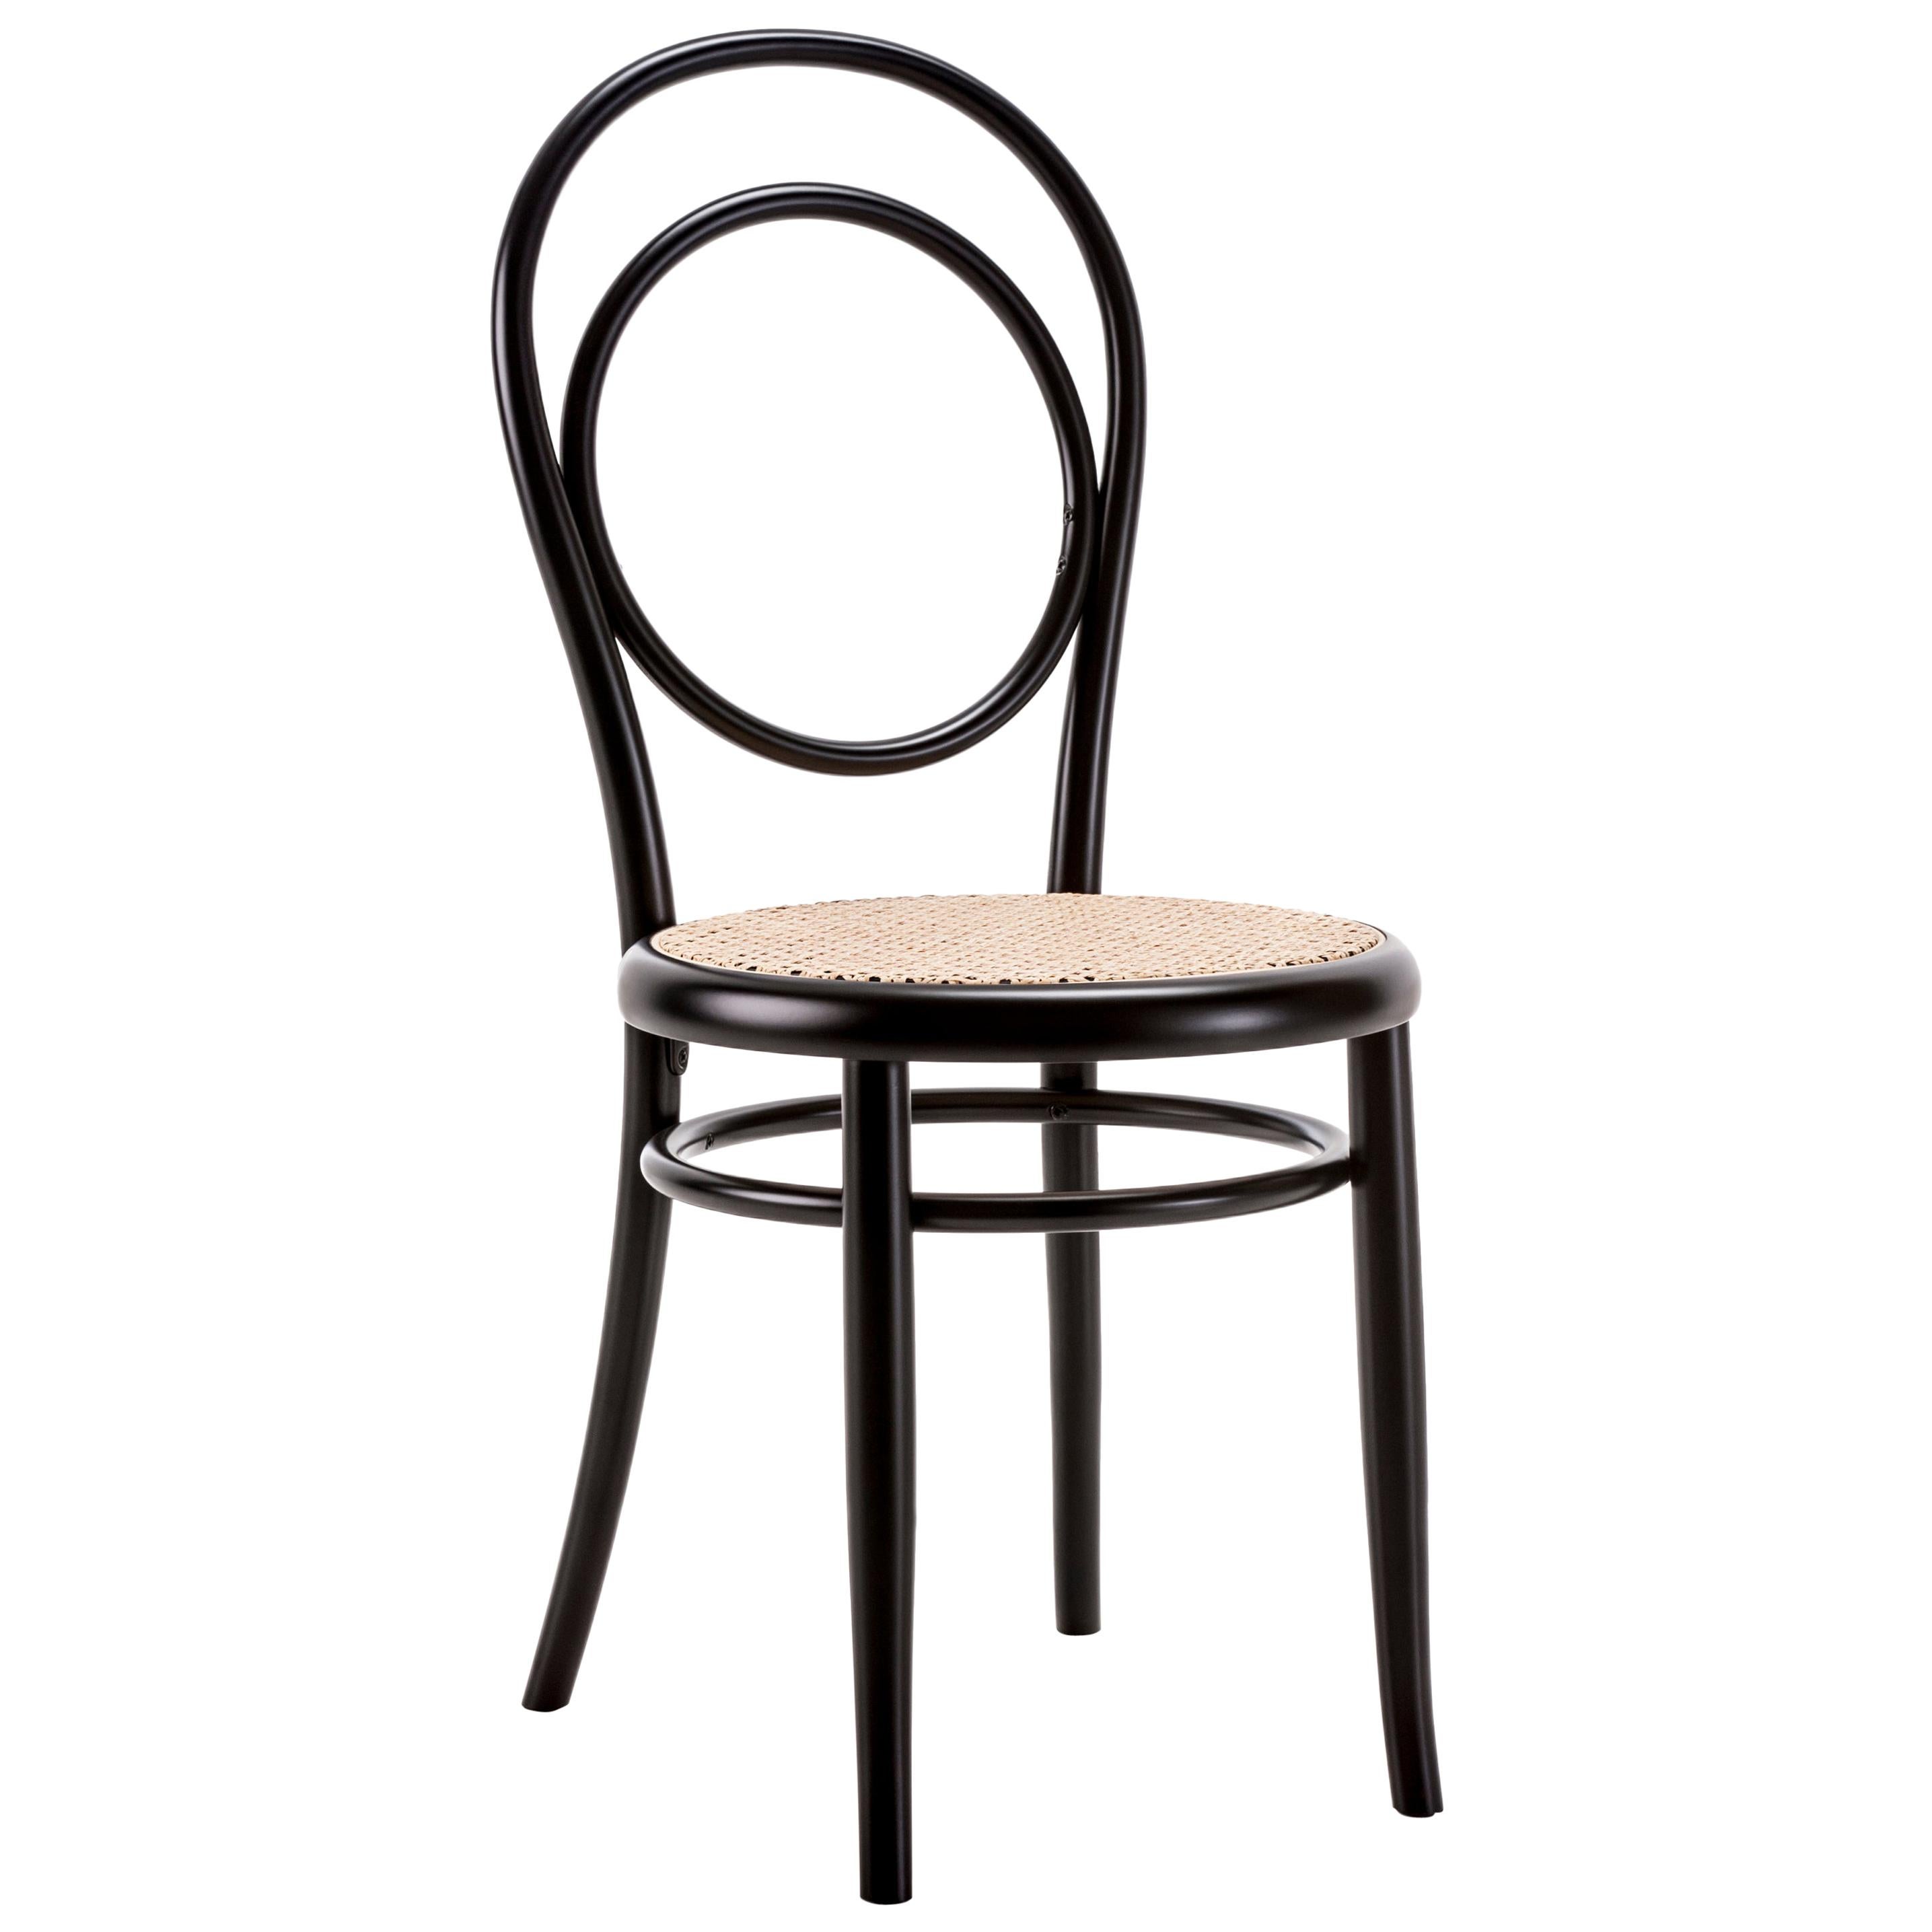 Gebrüder Thonet Vienna GmbH N.14 Chair in Black with Cane Seat For Sale